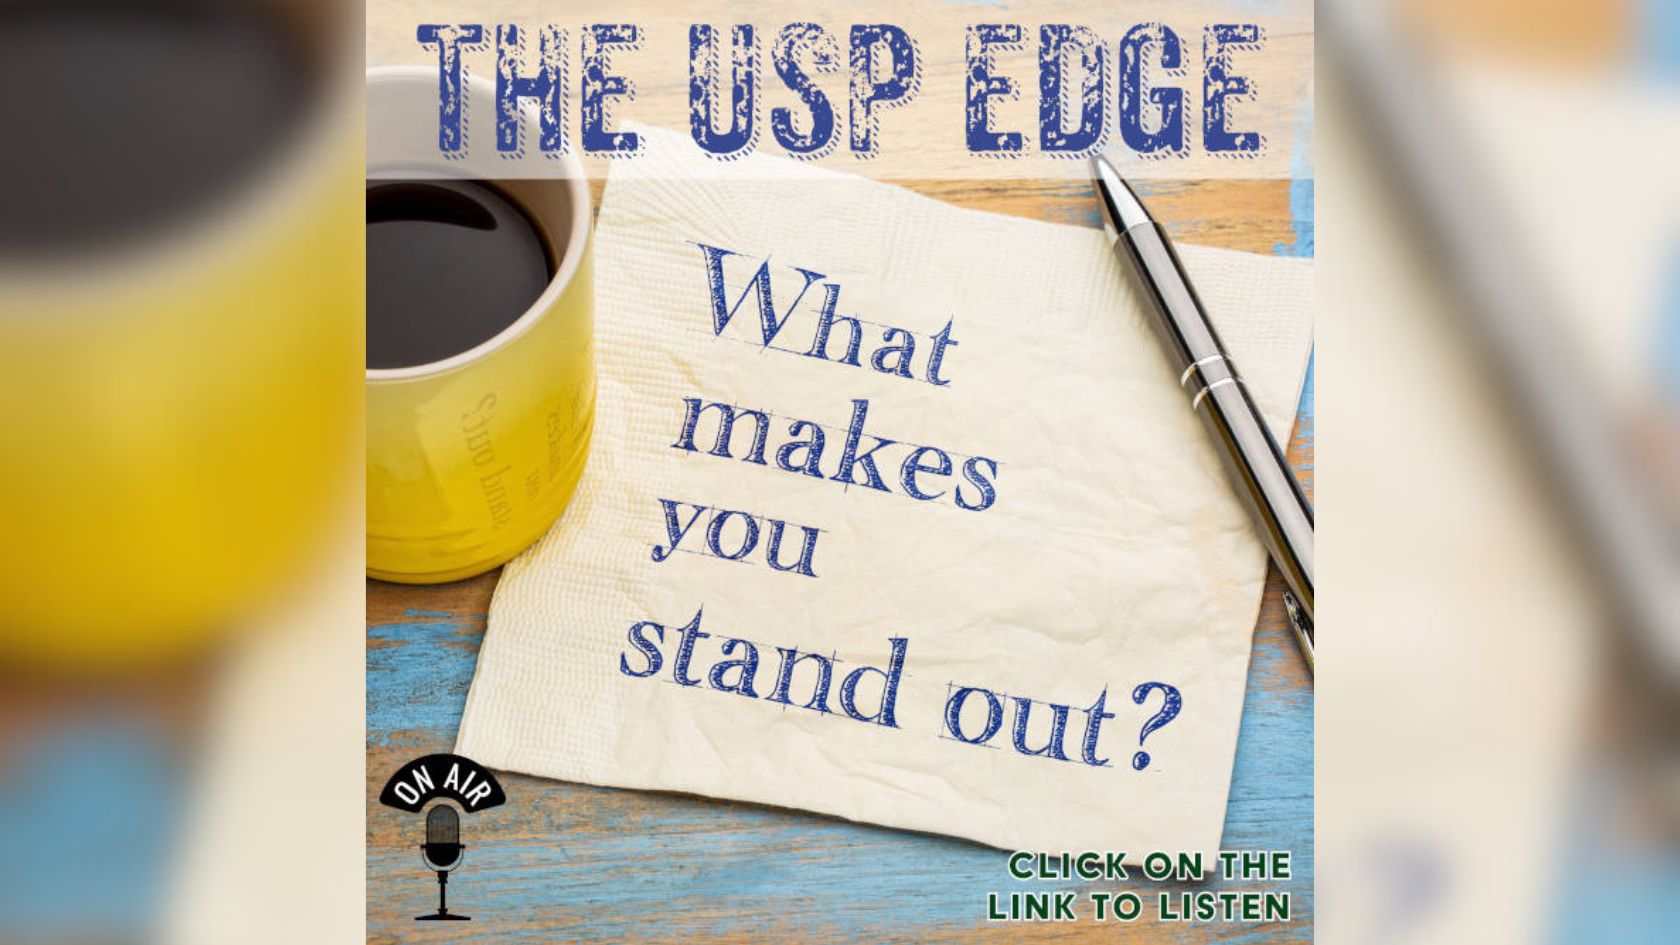 the USP Edge